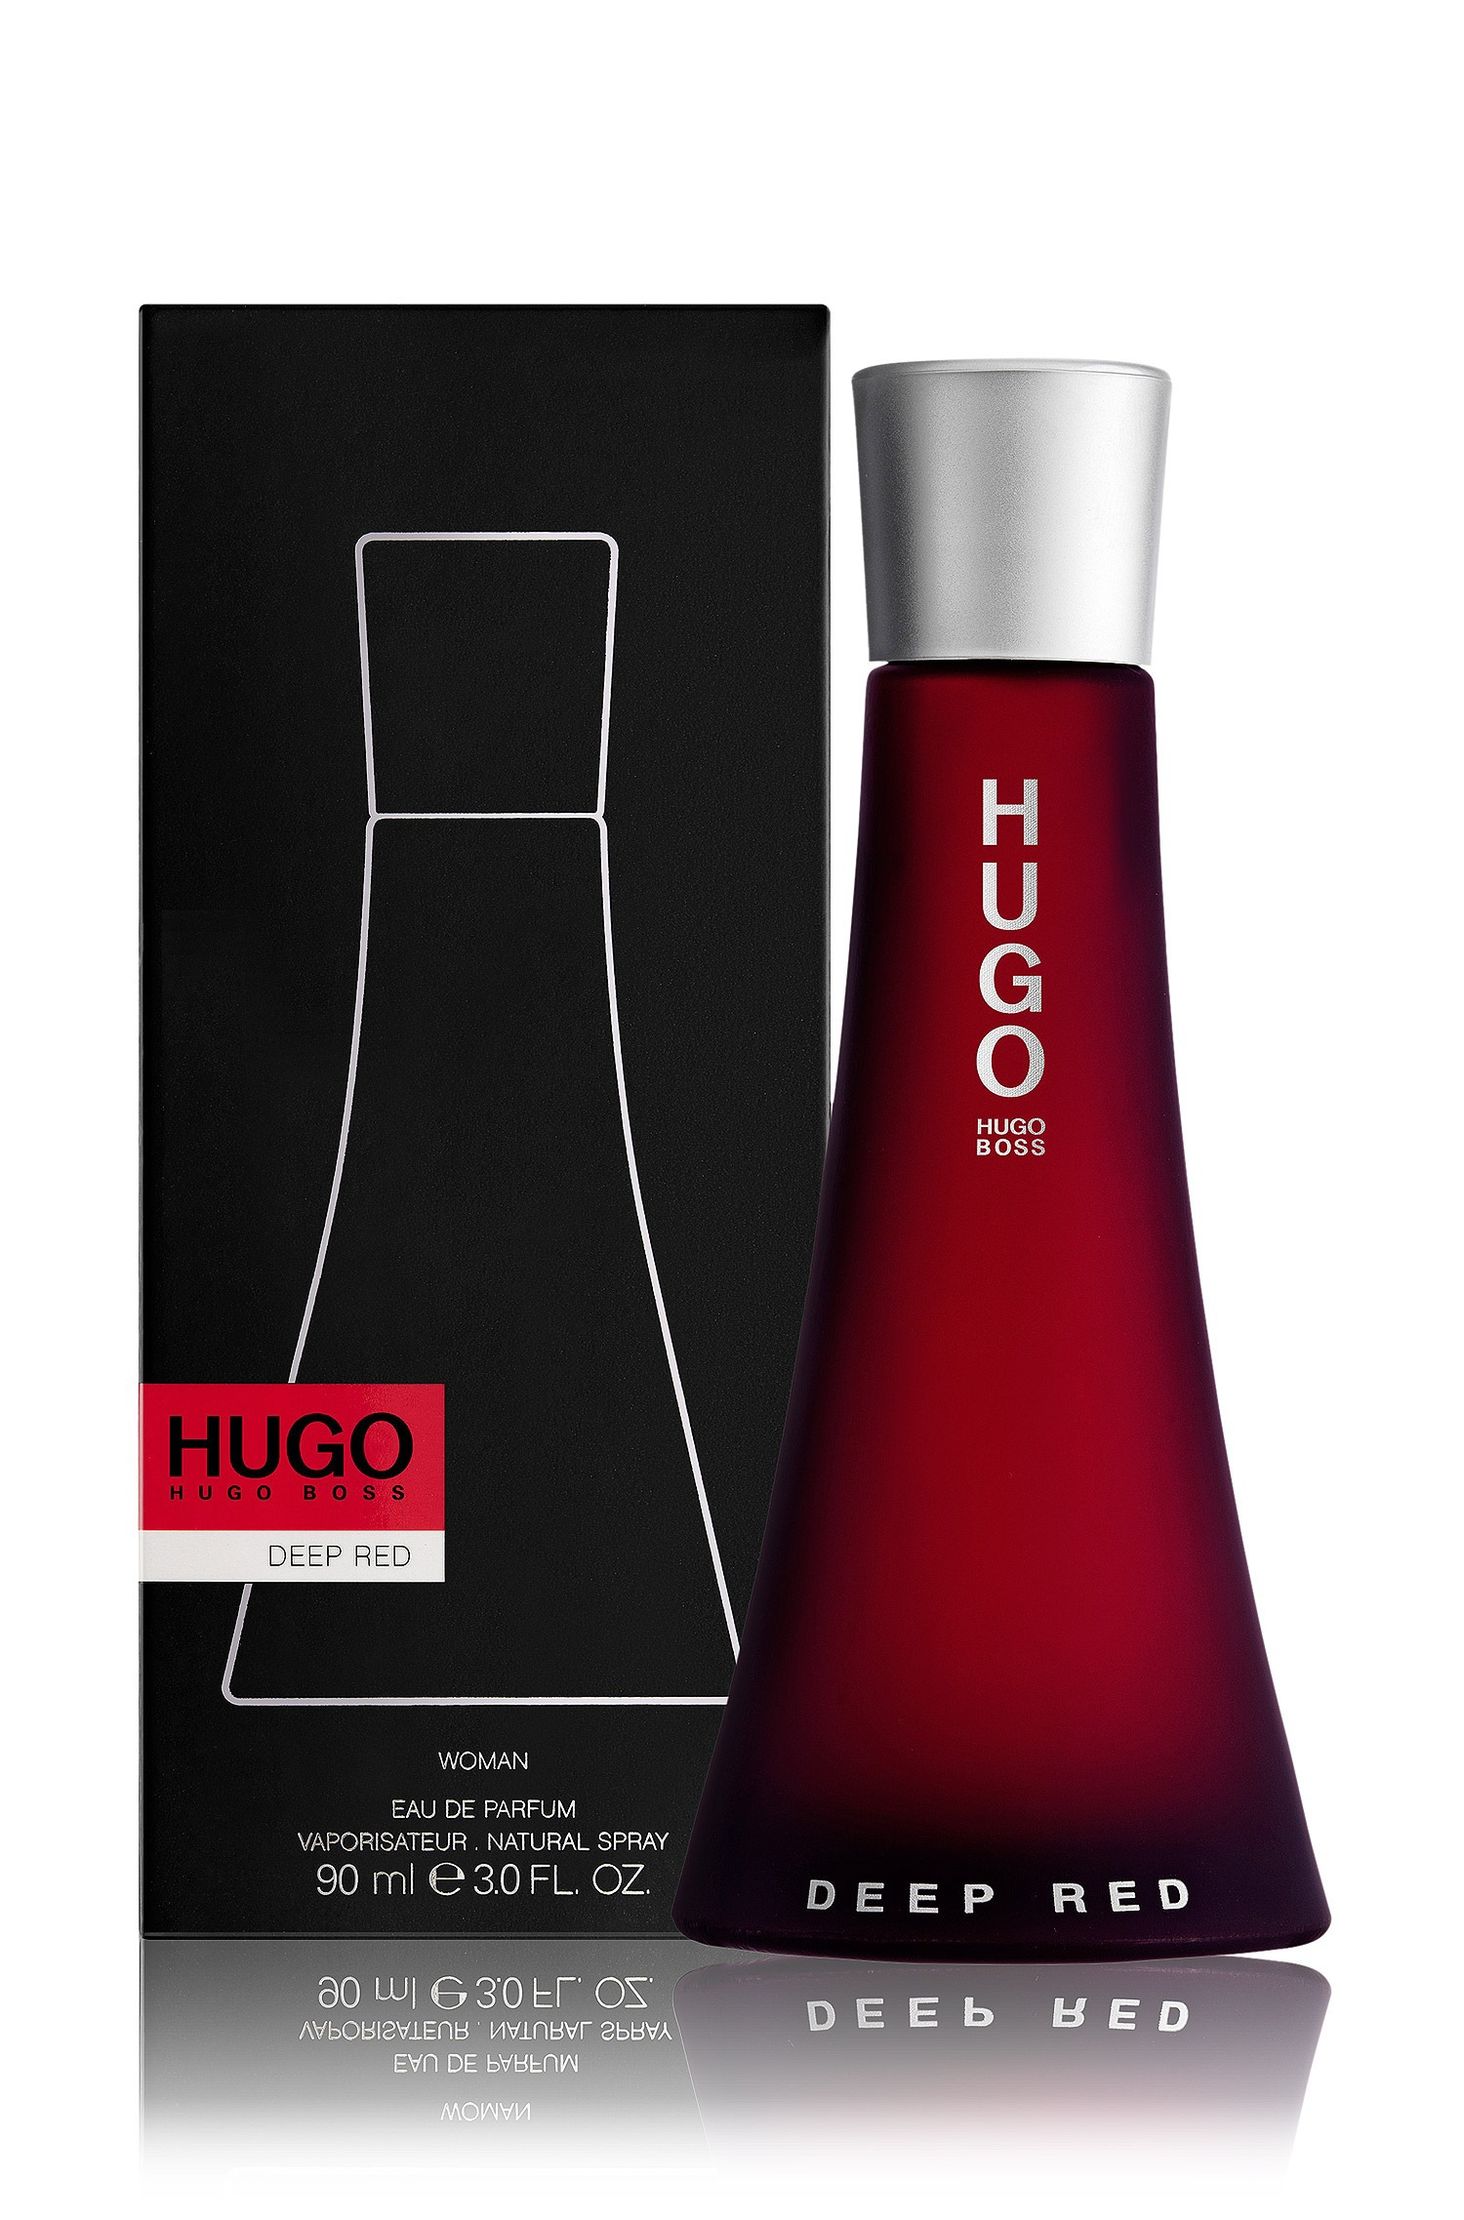 Хьюго босс дип. Хьюго босс дип ред. Hugo Deep Red w EDP 90 ml. Hugo Boss Deep Red/парфюмерная вода/90ml.. Духи Хьюго босс дип ред.